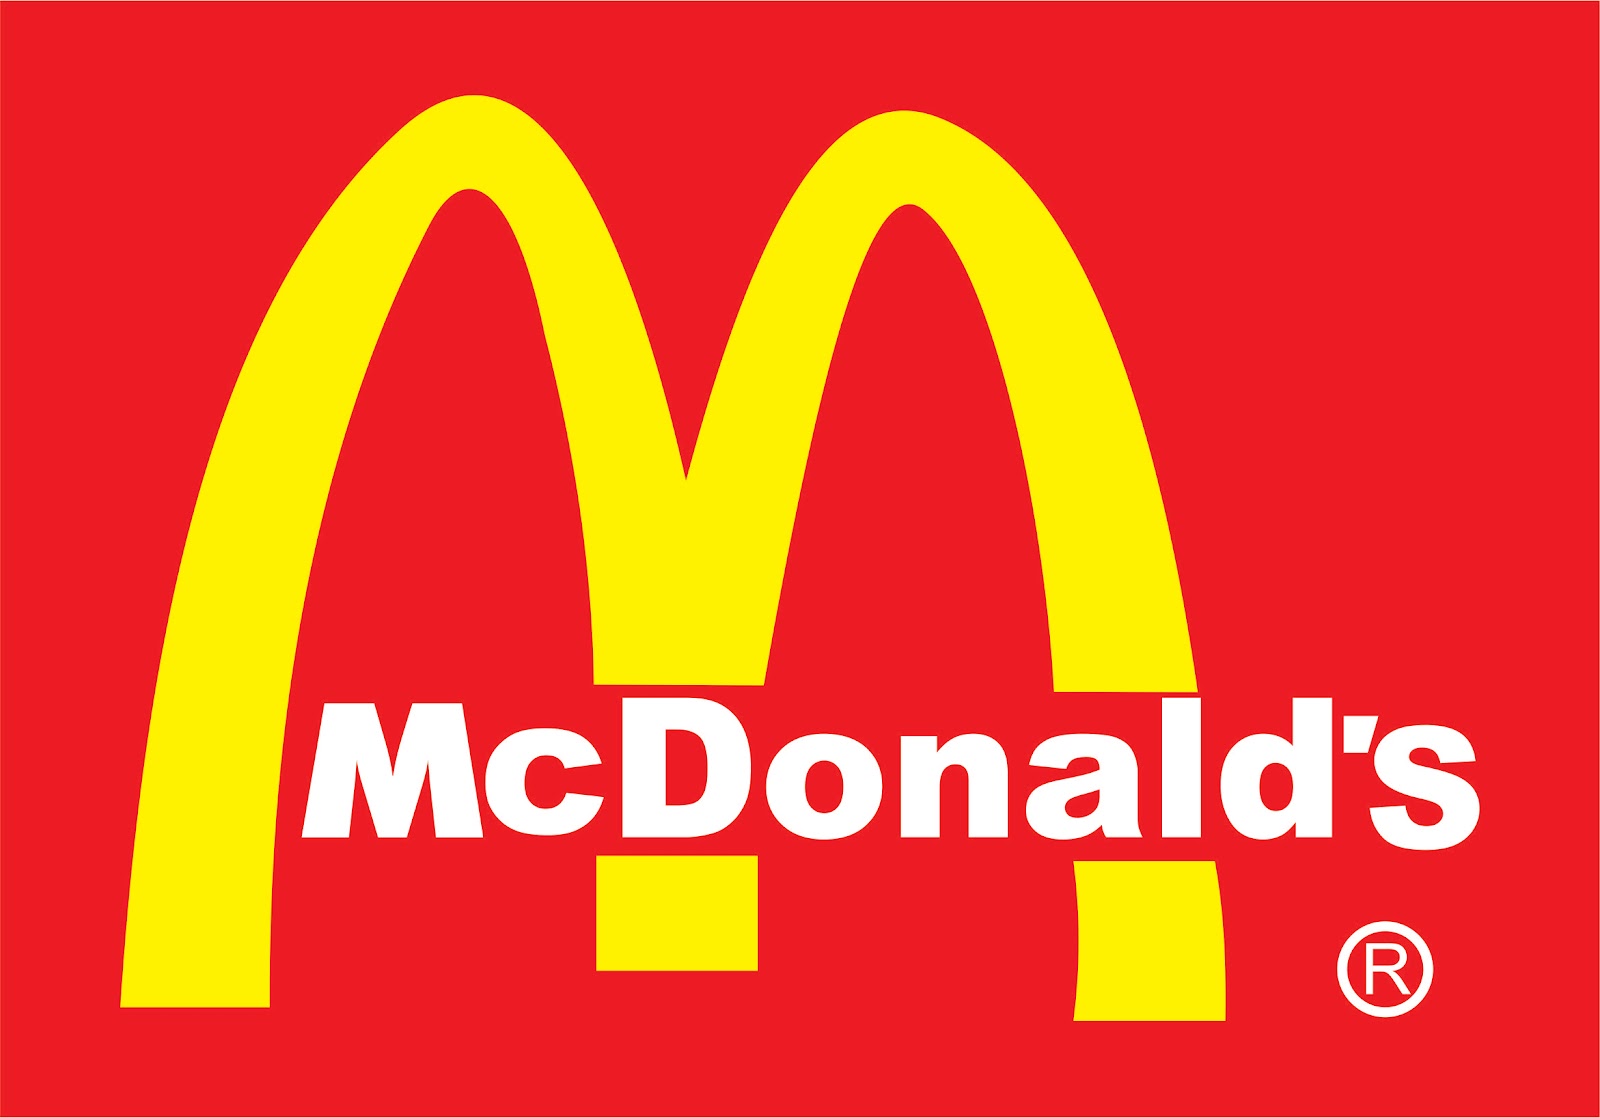 mcdonalds clip art logo - photo #40